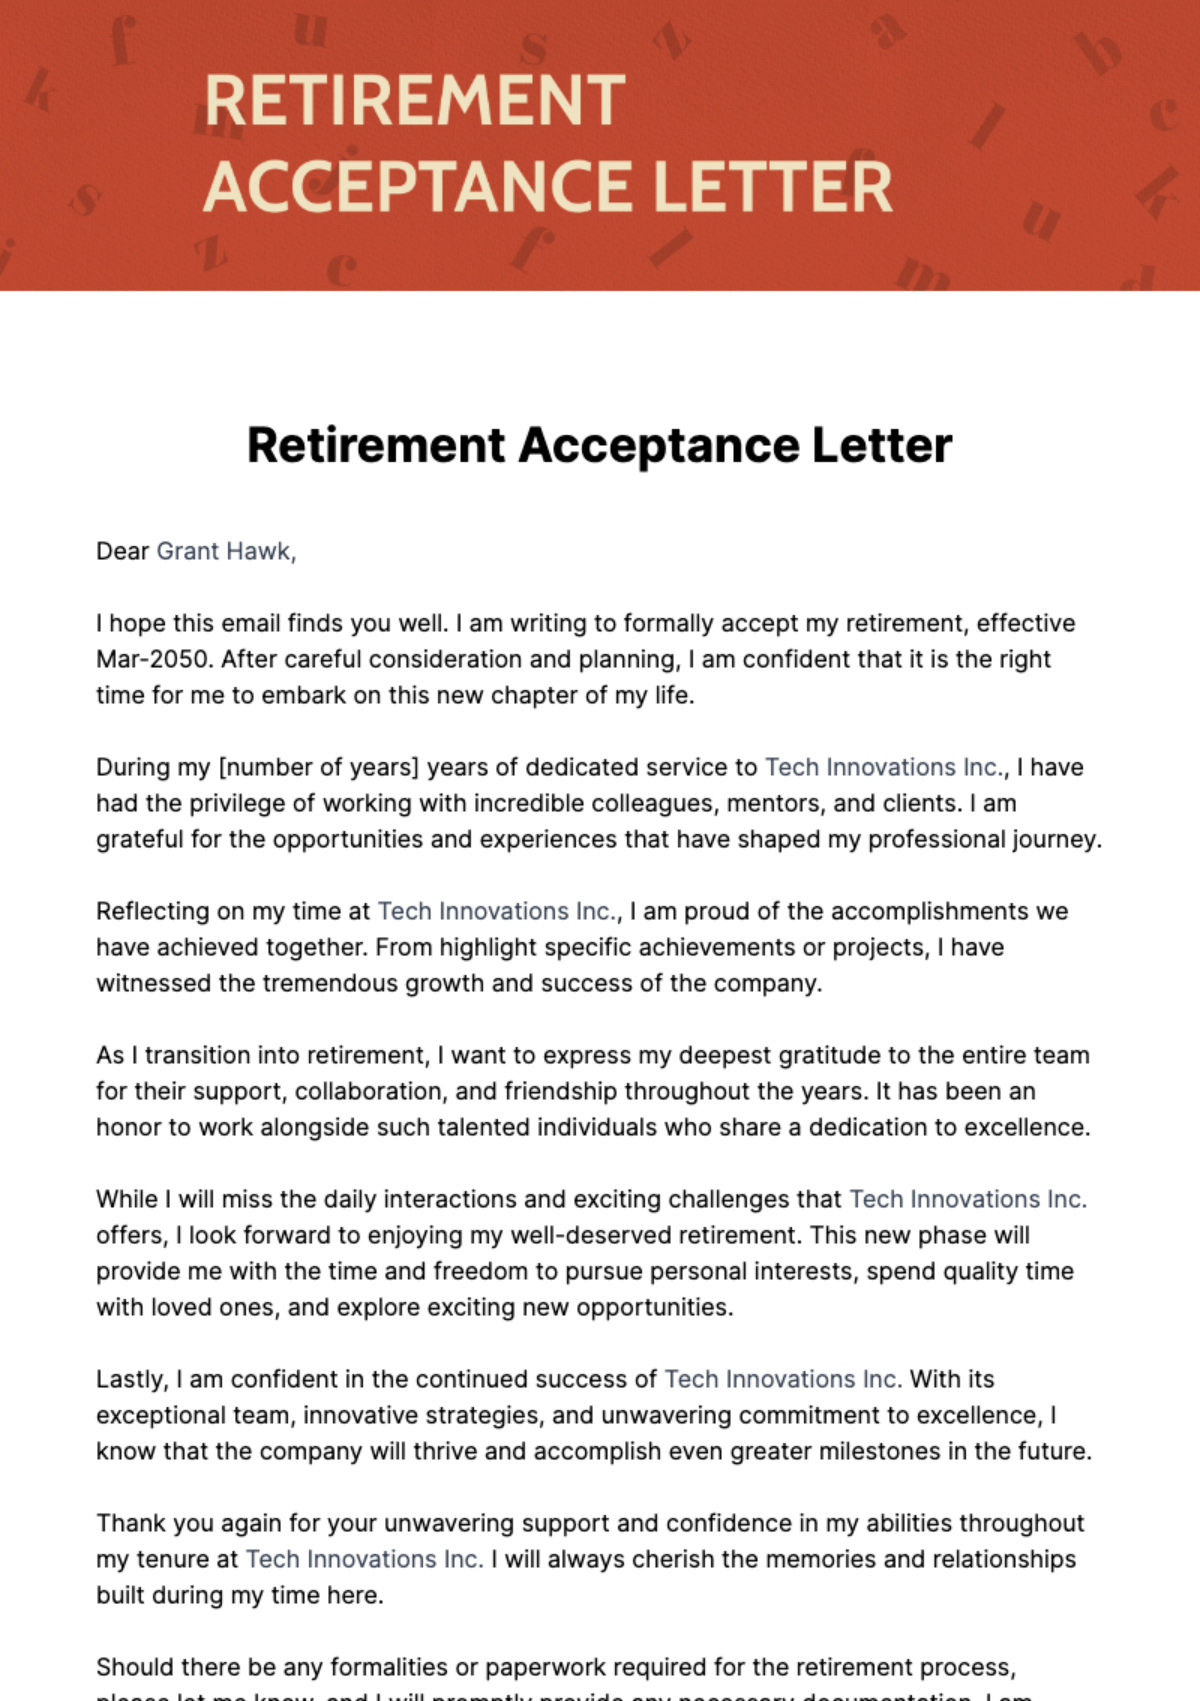 Free Retirement Acceptance Letter Template